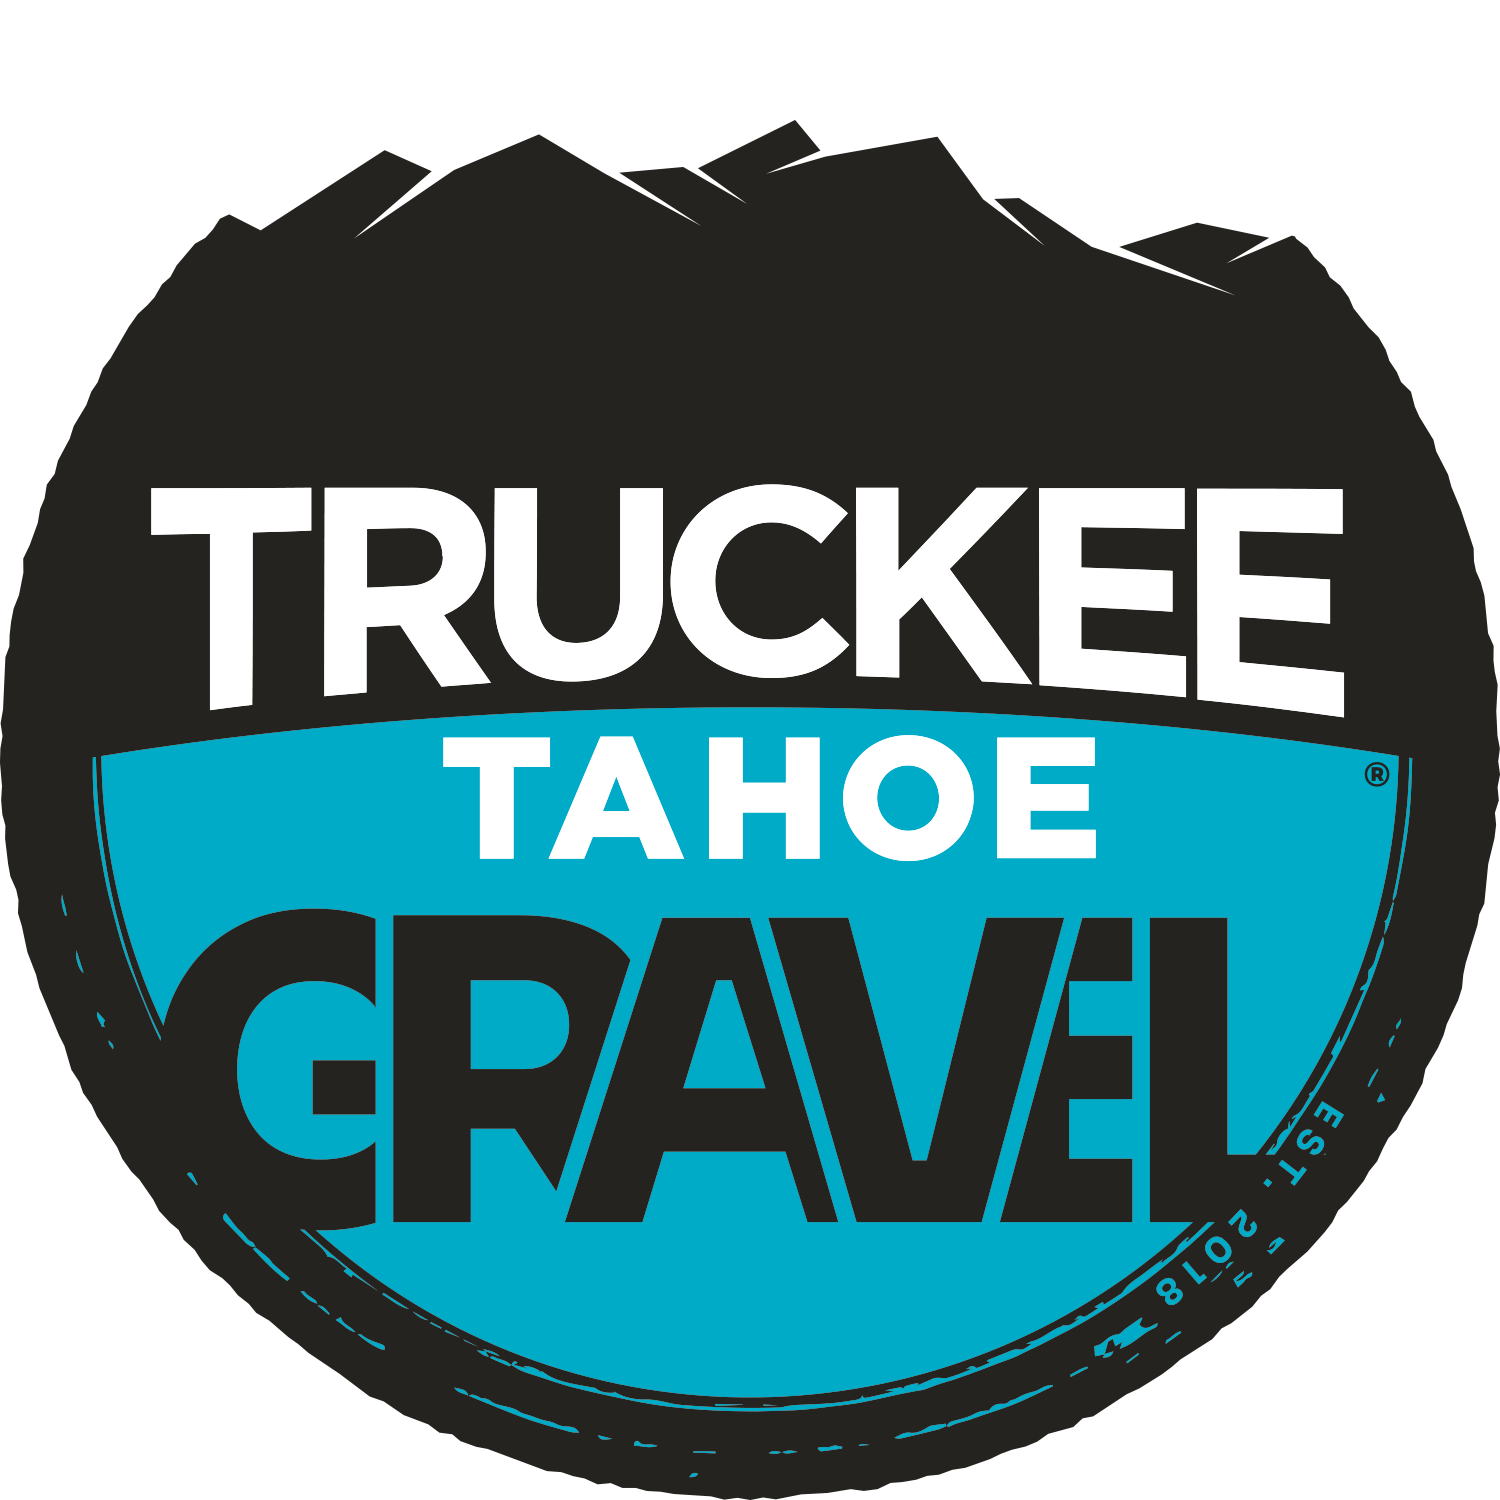 truckee tahoe gravel - Truckee Trails Foundation